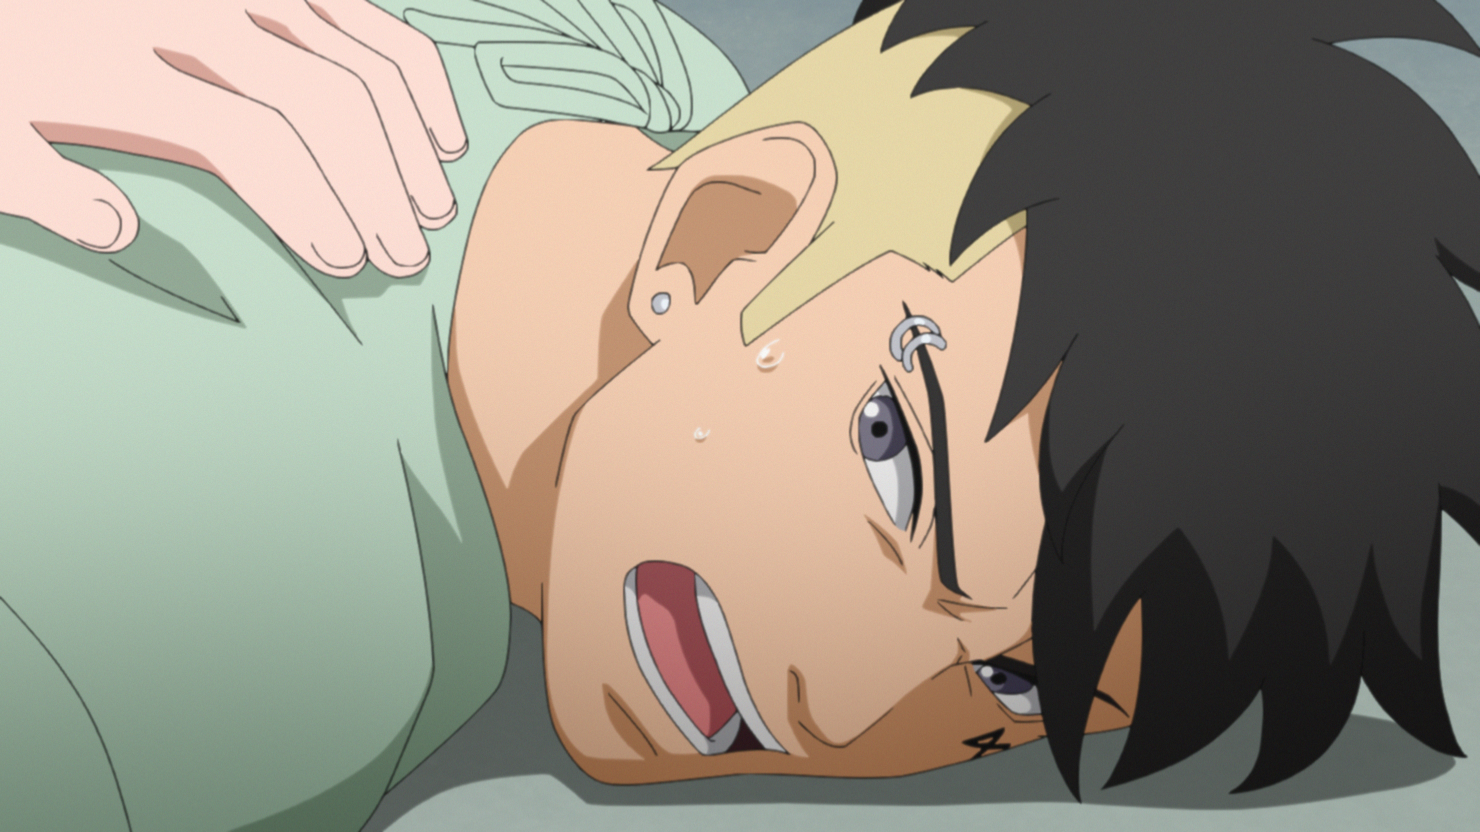 Boruto: Naruto Next Generations - Volume 11: Episode 190-205 [DVD] Image 5